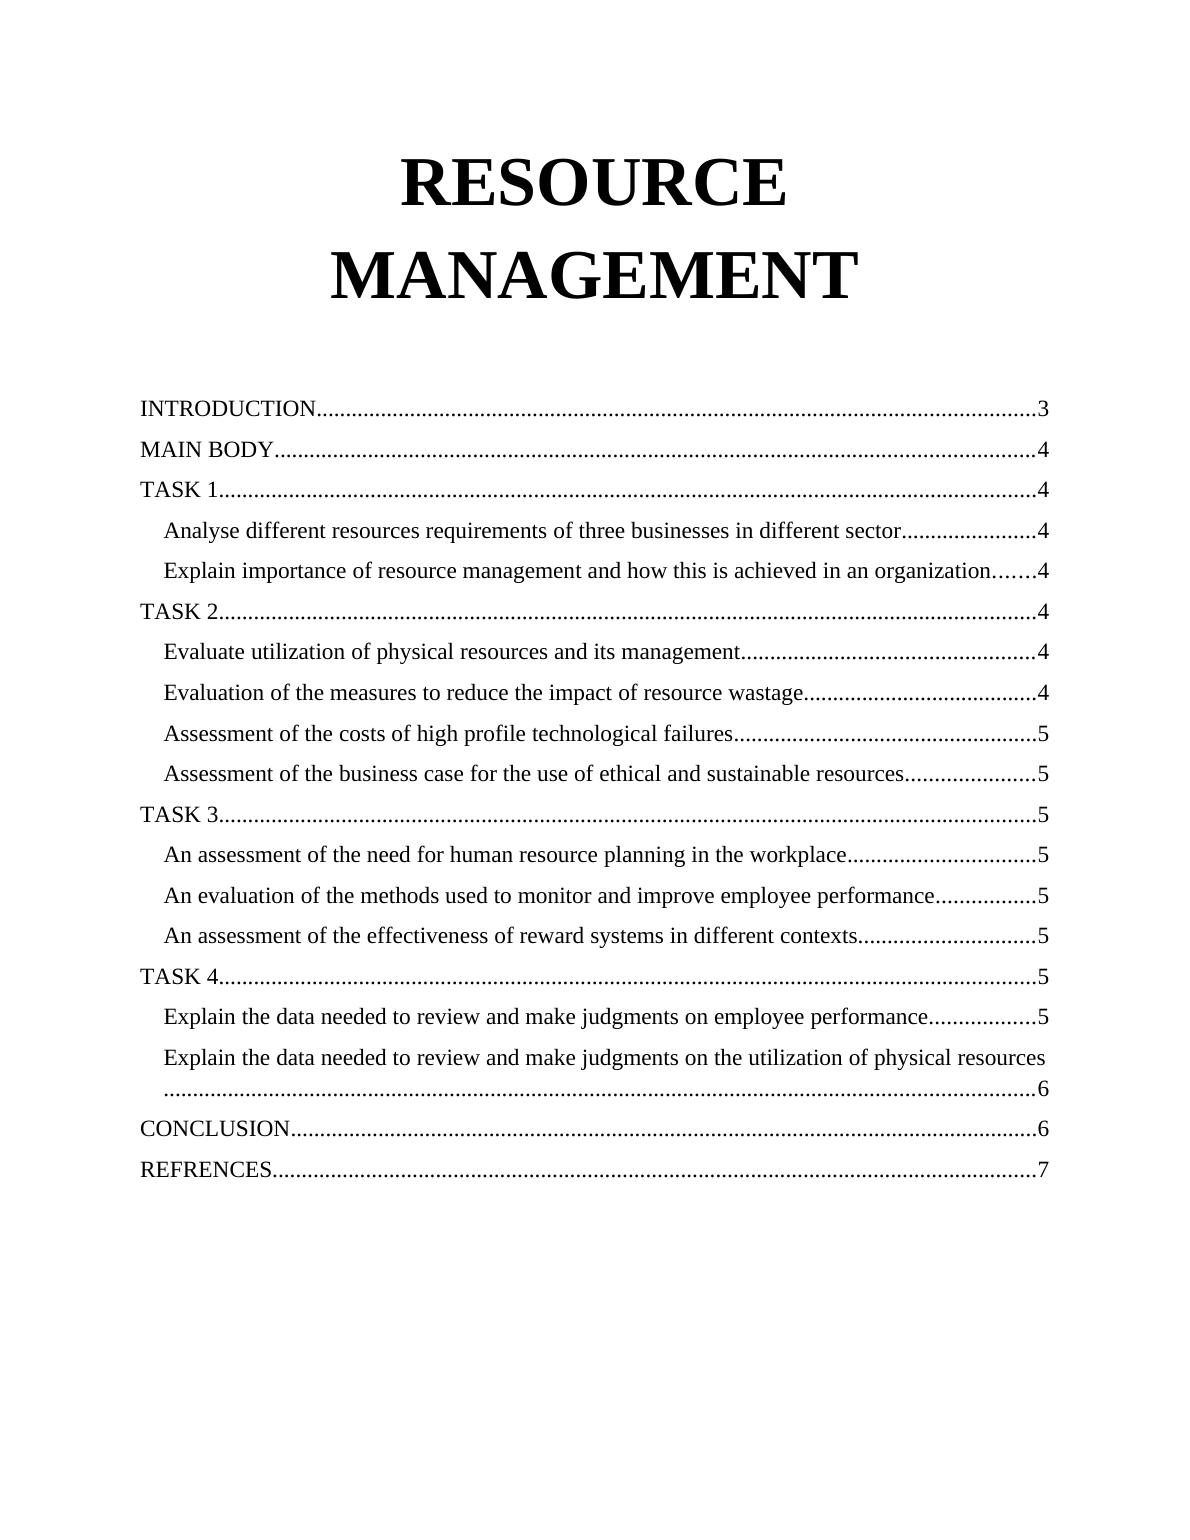 Resource Management in Organizations_1